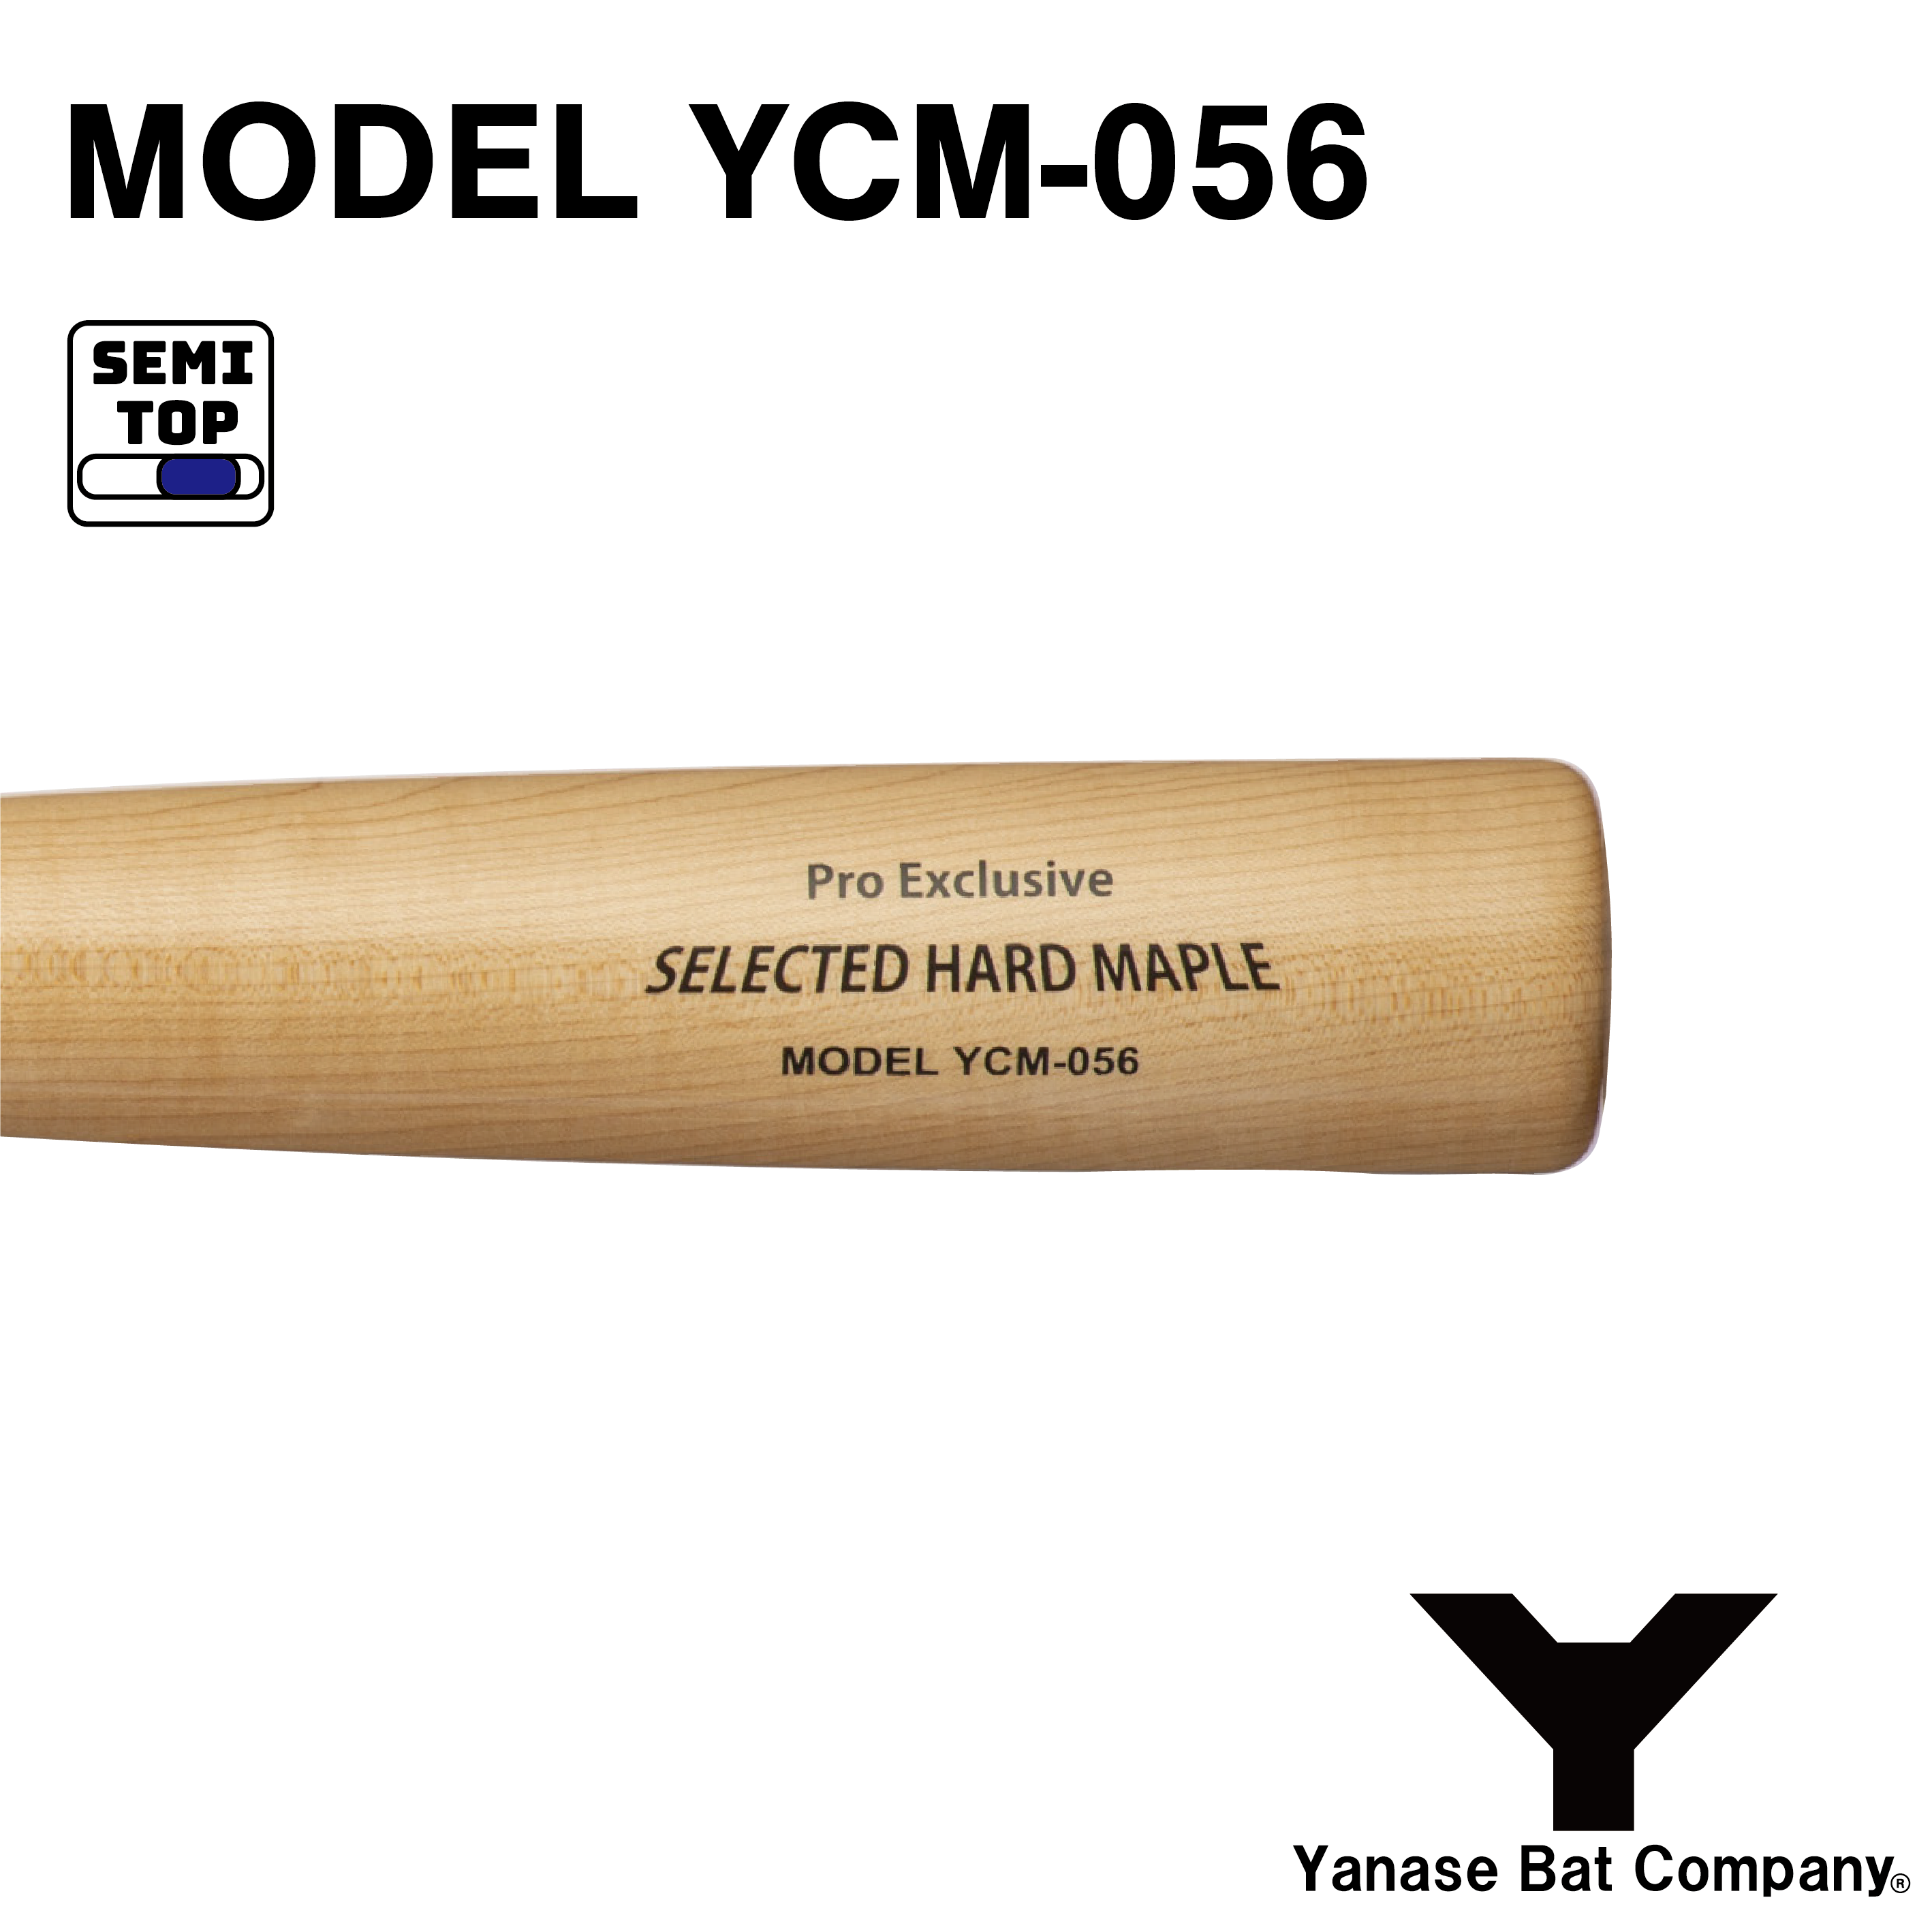 YCM-056 - YANASE BAT COMPANY